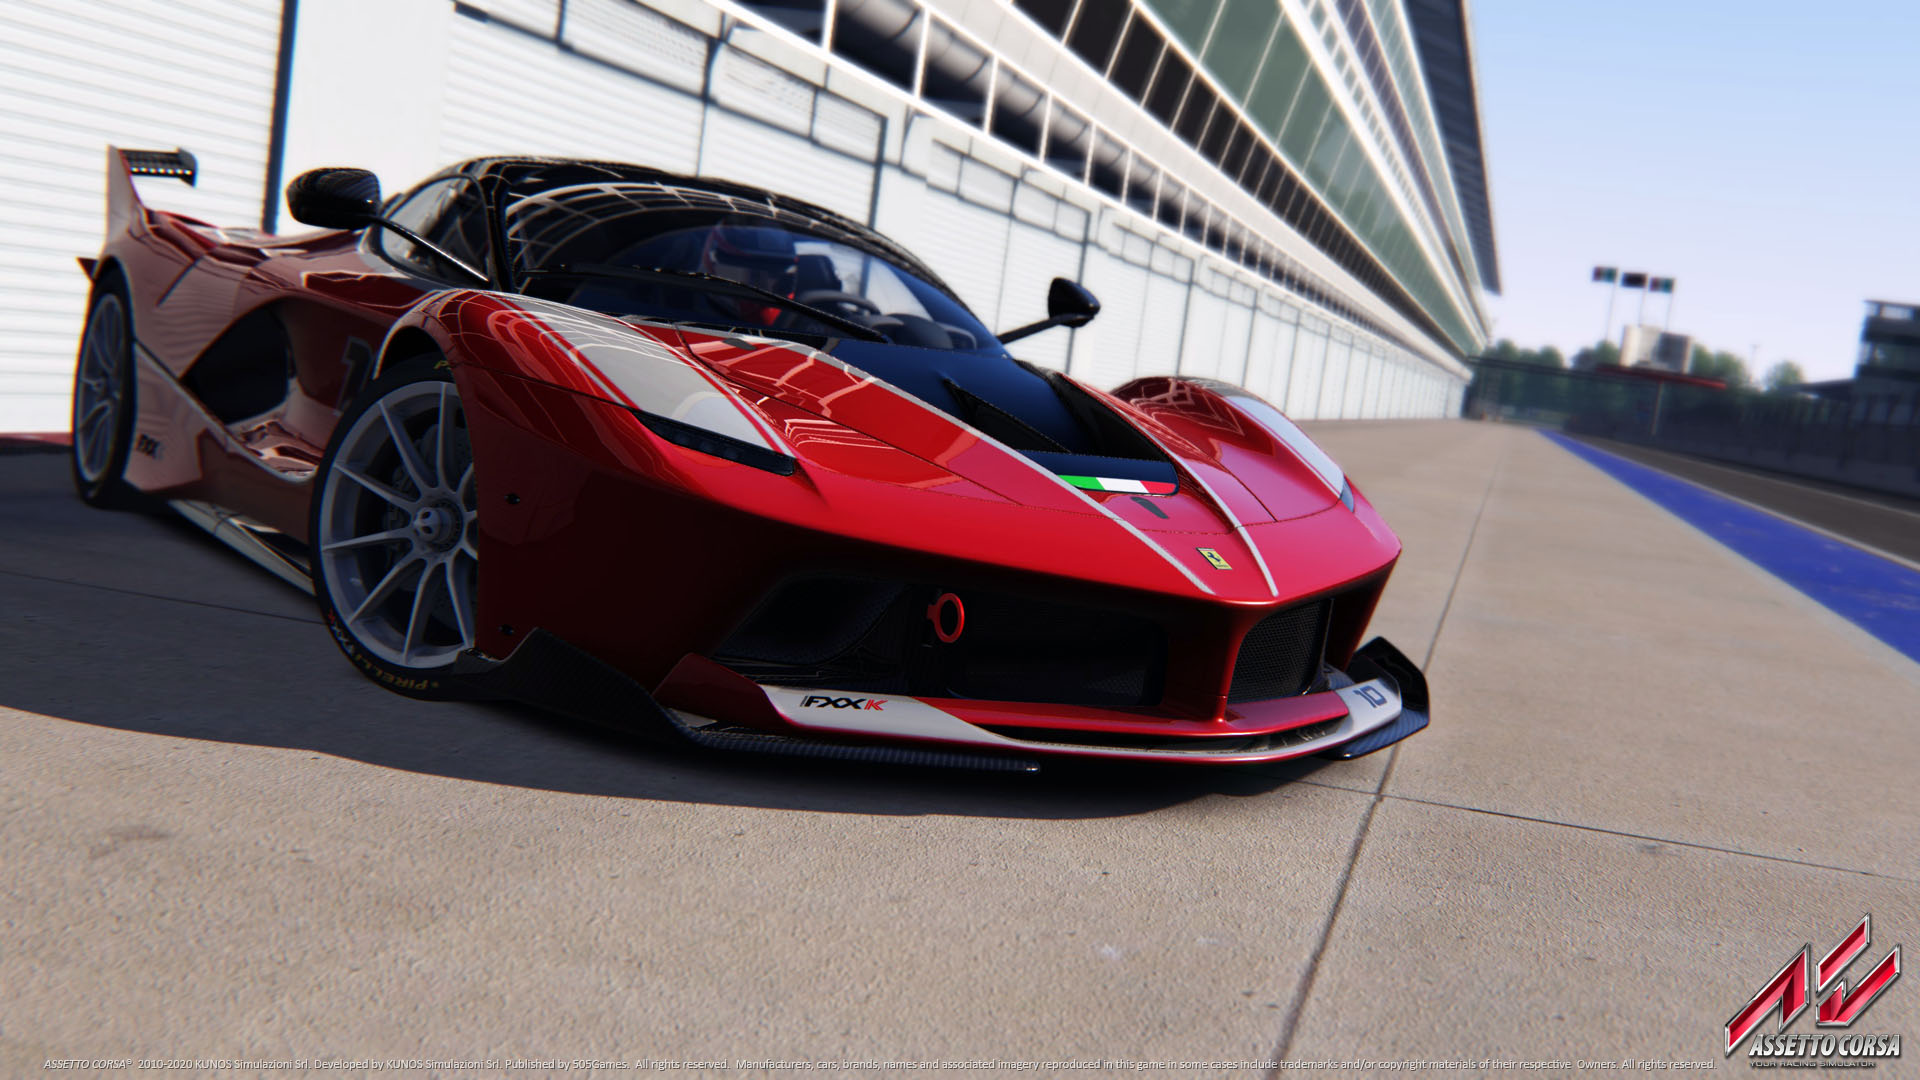 Assetto Corsa (PS4) - Ferrari FXX K Gameplay @ Spa Francorchamps [1080P  60FPS] 